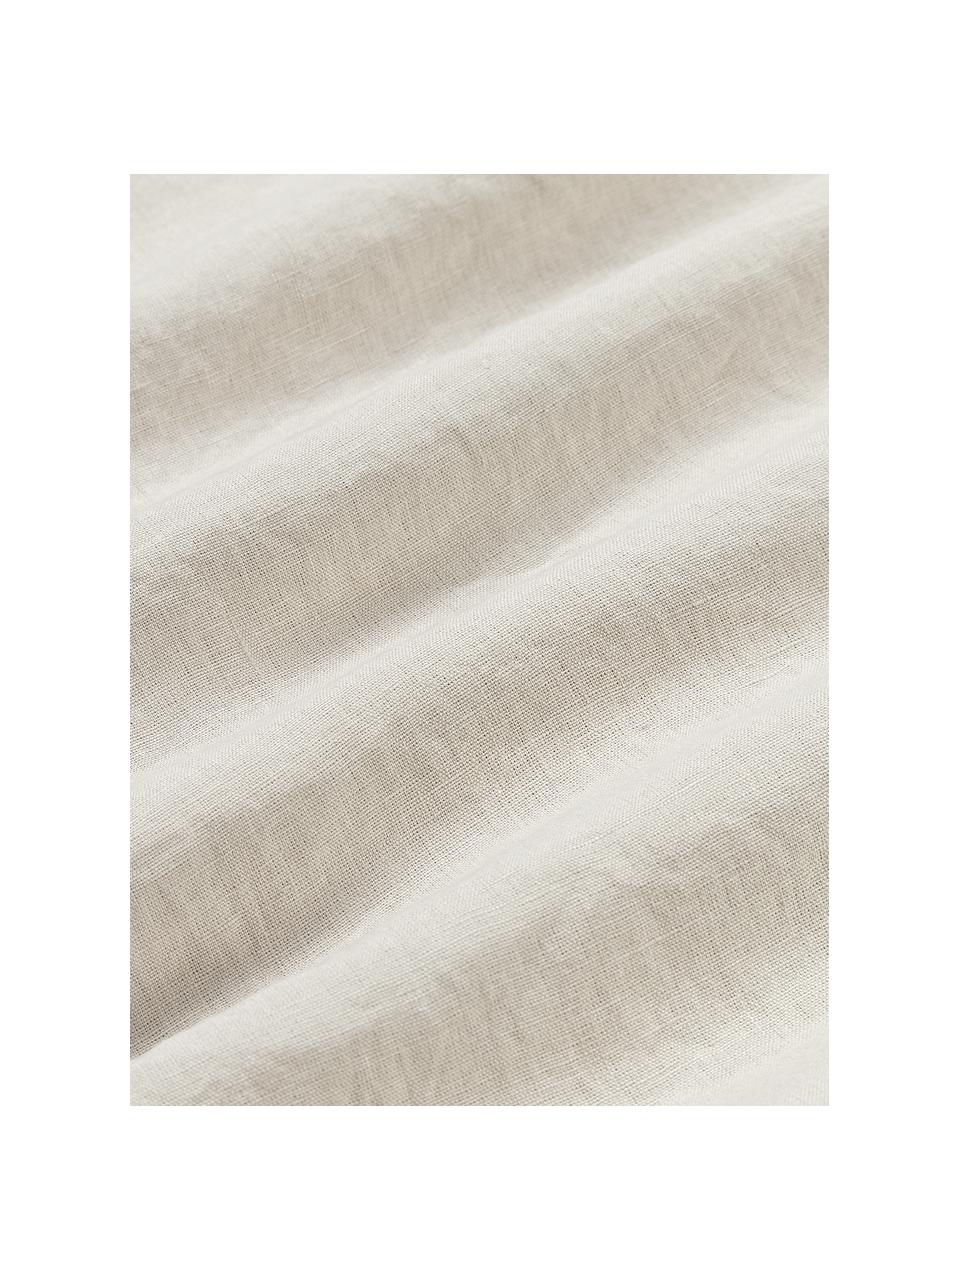 Lenzuola in lino lavato Airy, Beige chiaro, Larg. 240 x Lung. 280 cm